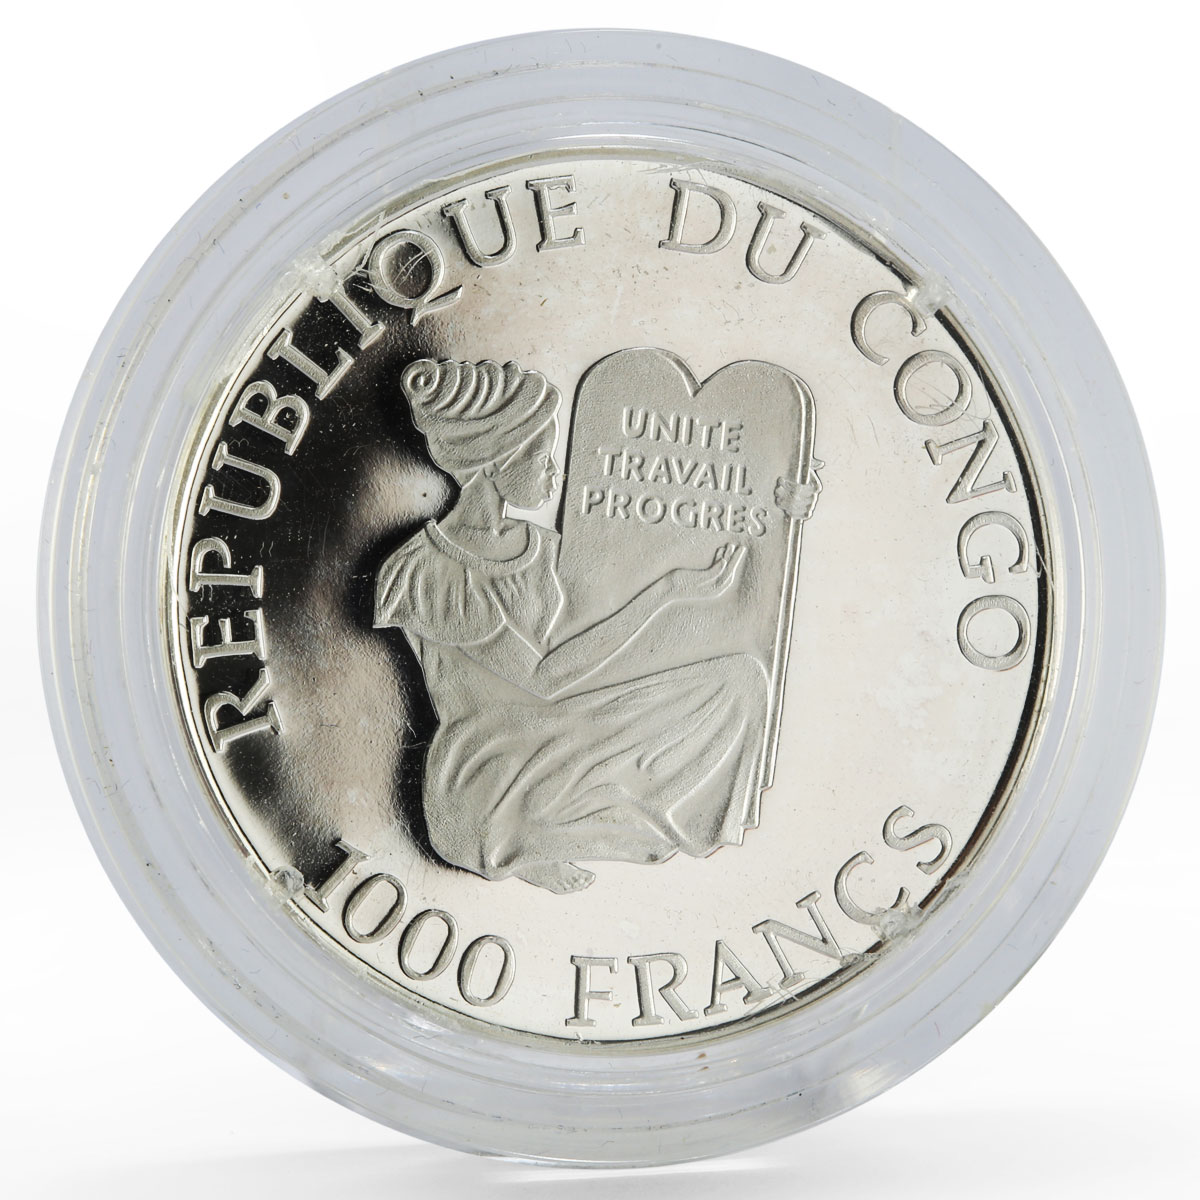 Congo 1000 francs Millennium Hourglass proof silver coin 1998